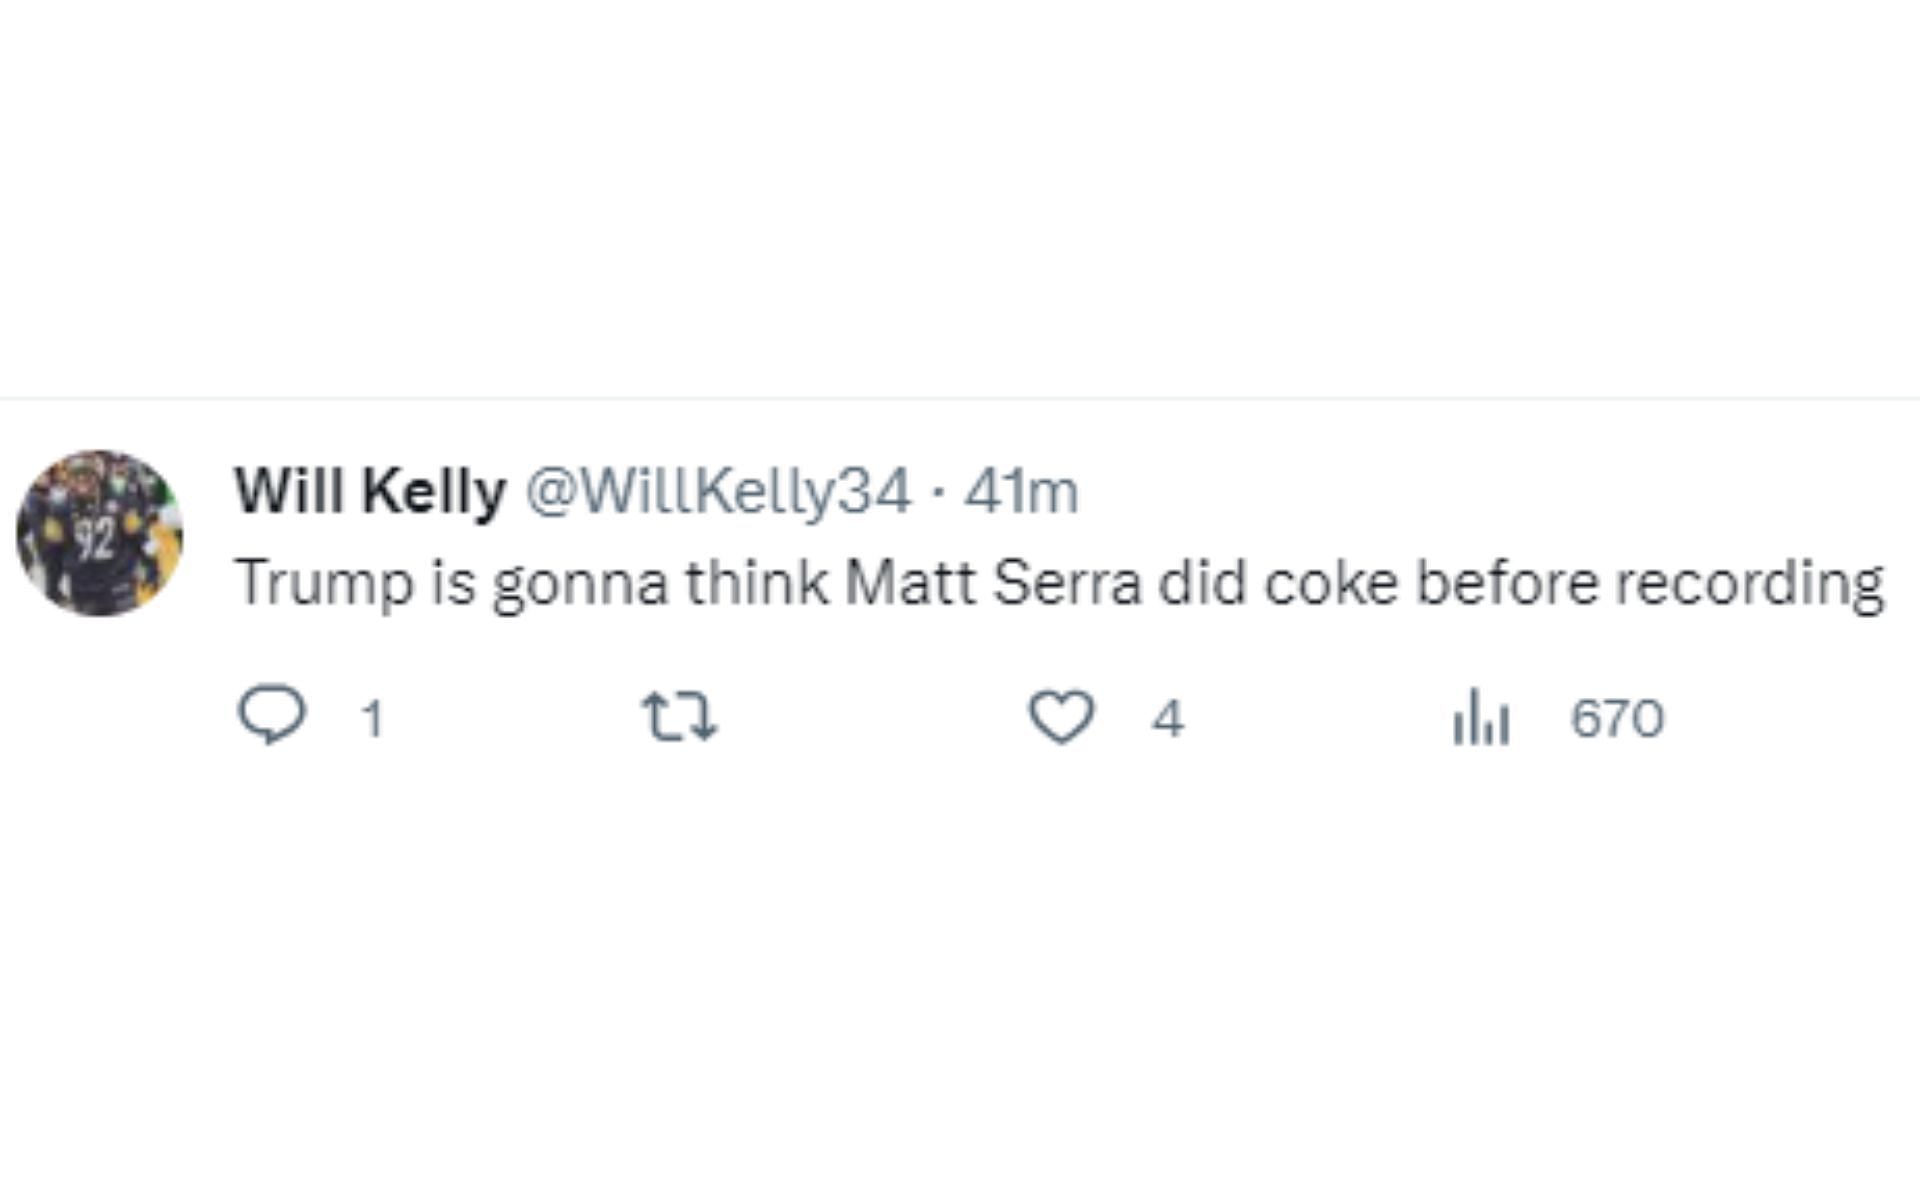 Fan reacting to Matt Serra&#039;s situation in the episode